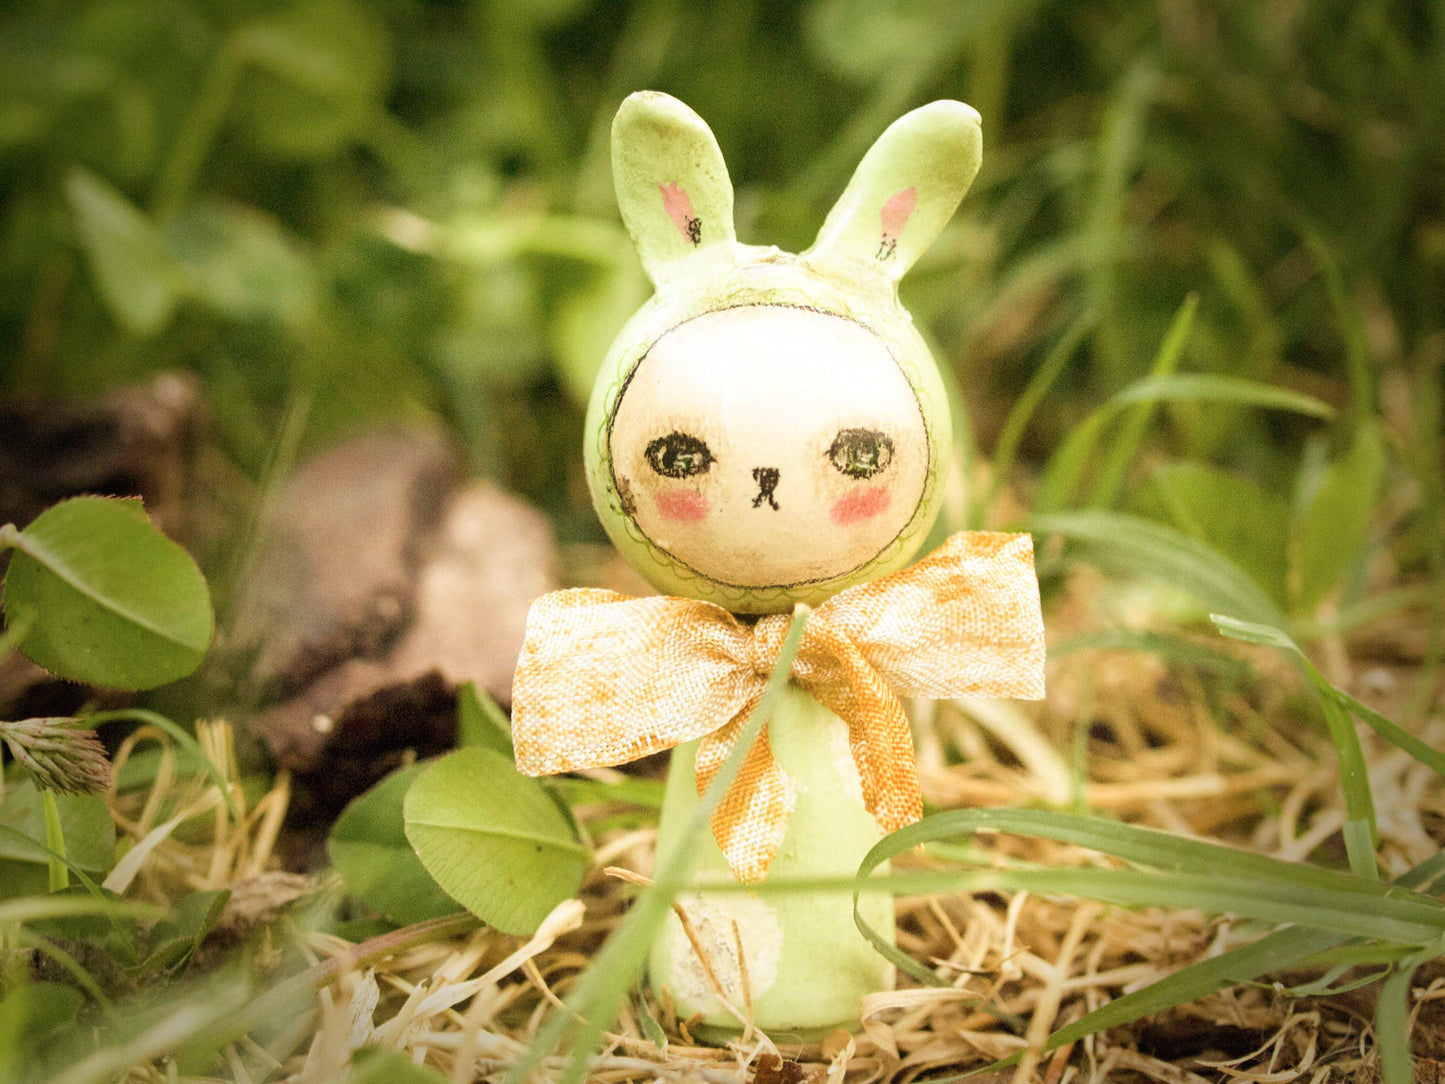 Beautiful handmade Easter bunny rabbit kokeshi art dolls are dwelling in the woods of Danita's fantasy land.